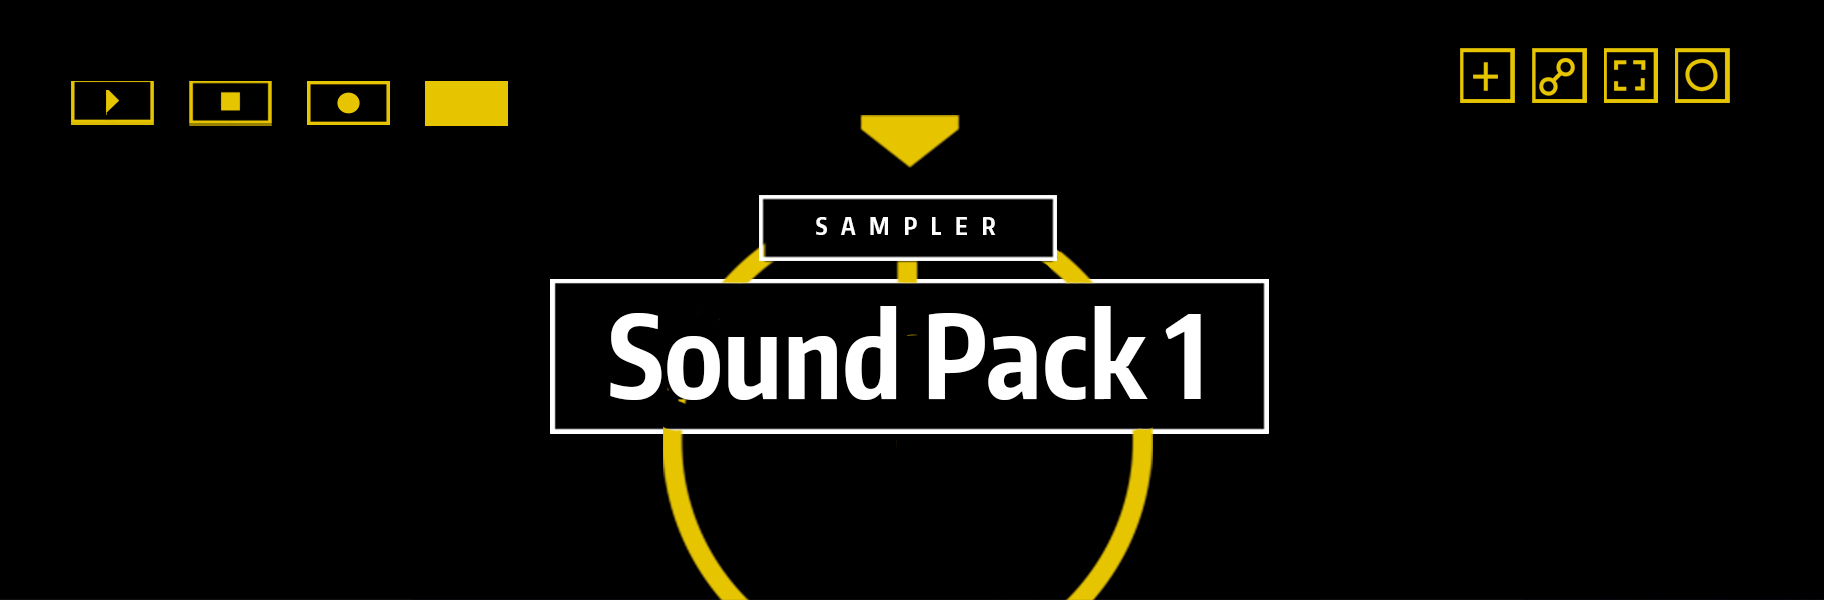 Sound pack